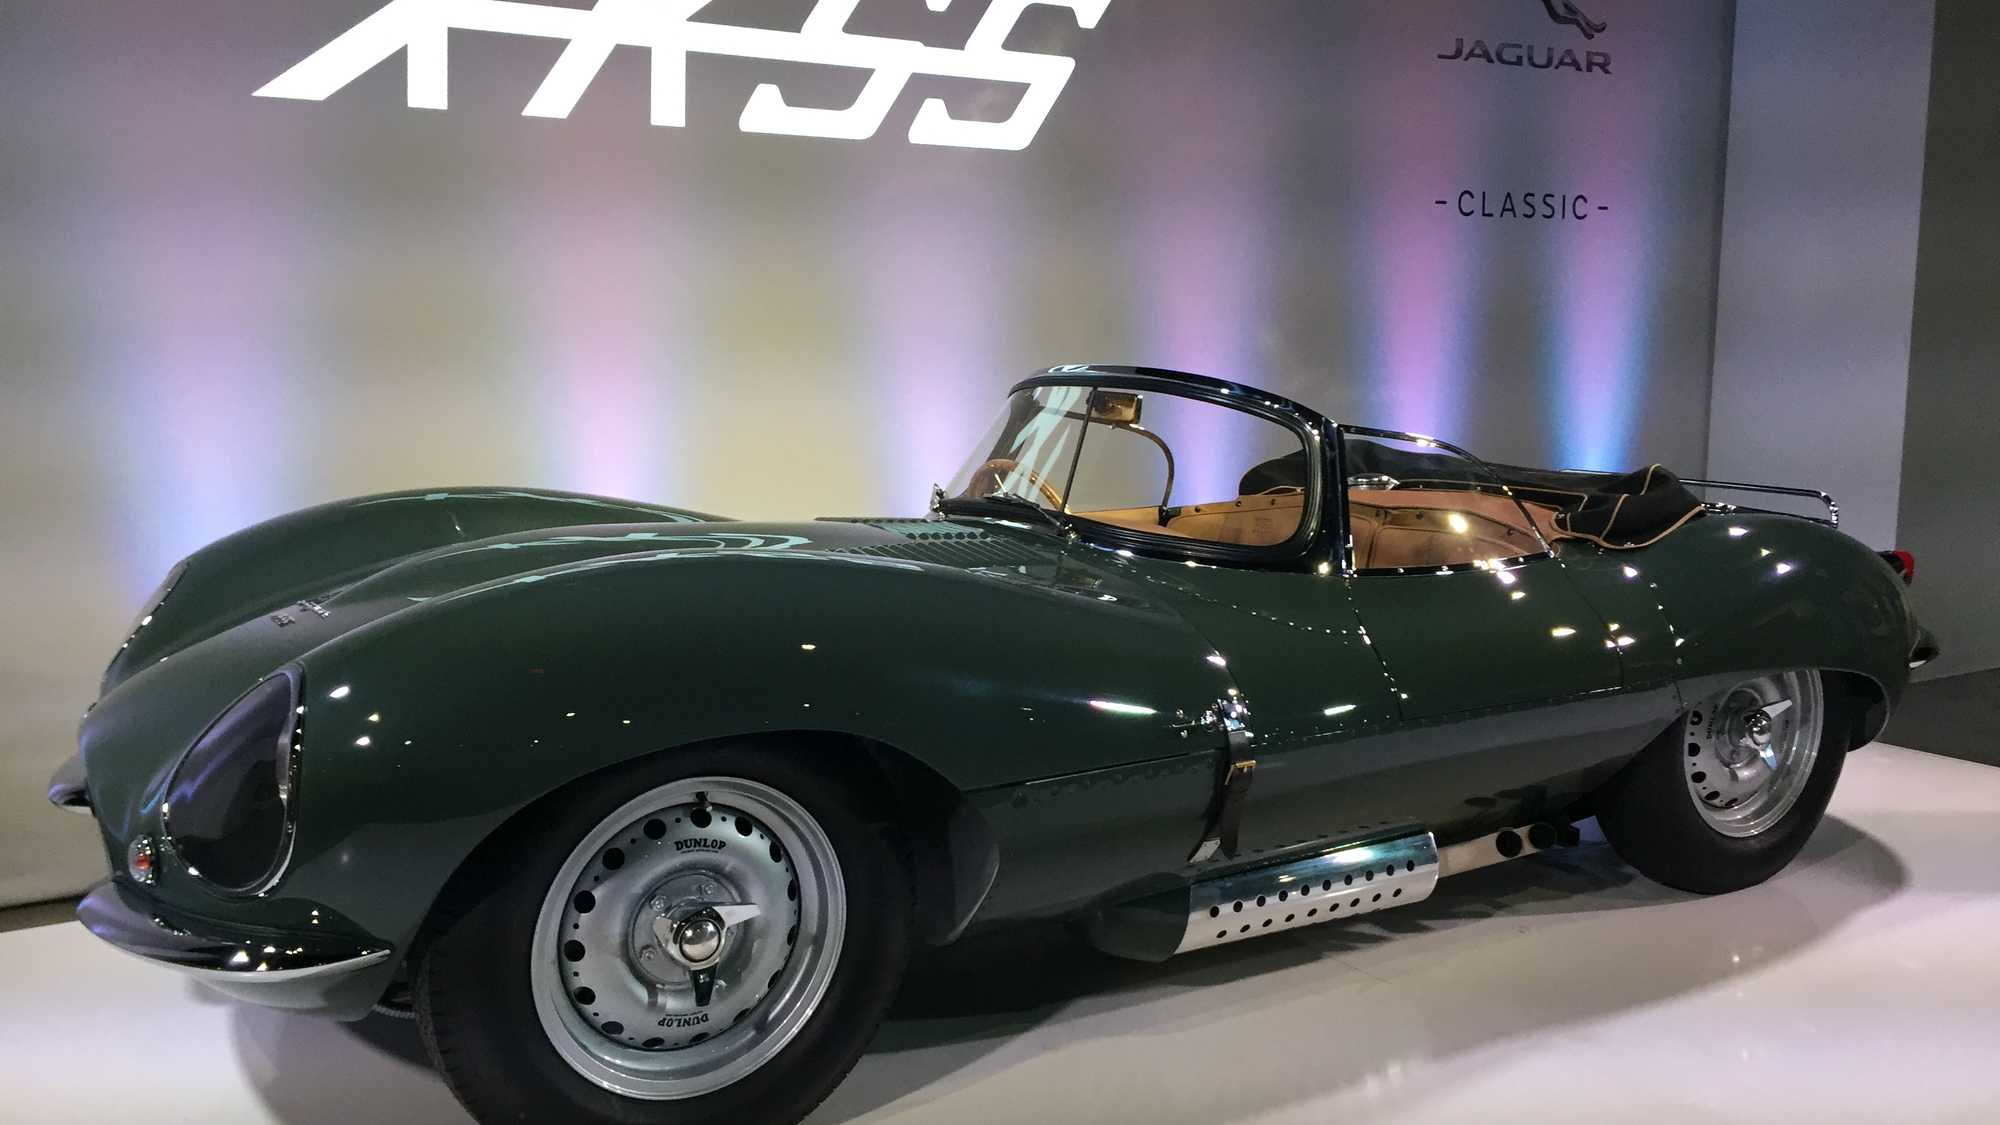 1957 Jaguar XKSS continuation model